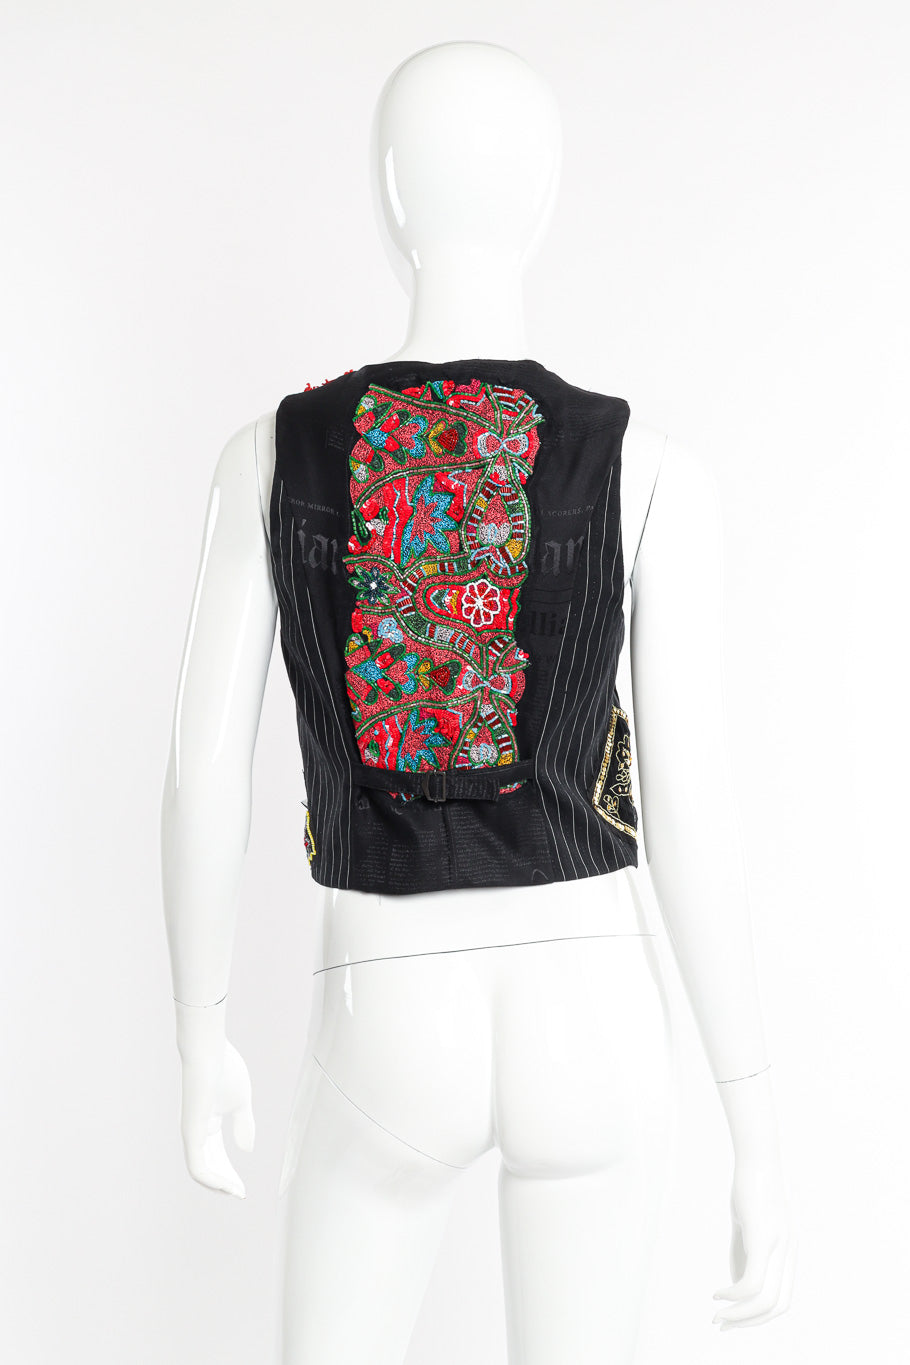 Pinstripe vest by John Galliano on mannequin back @recessla